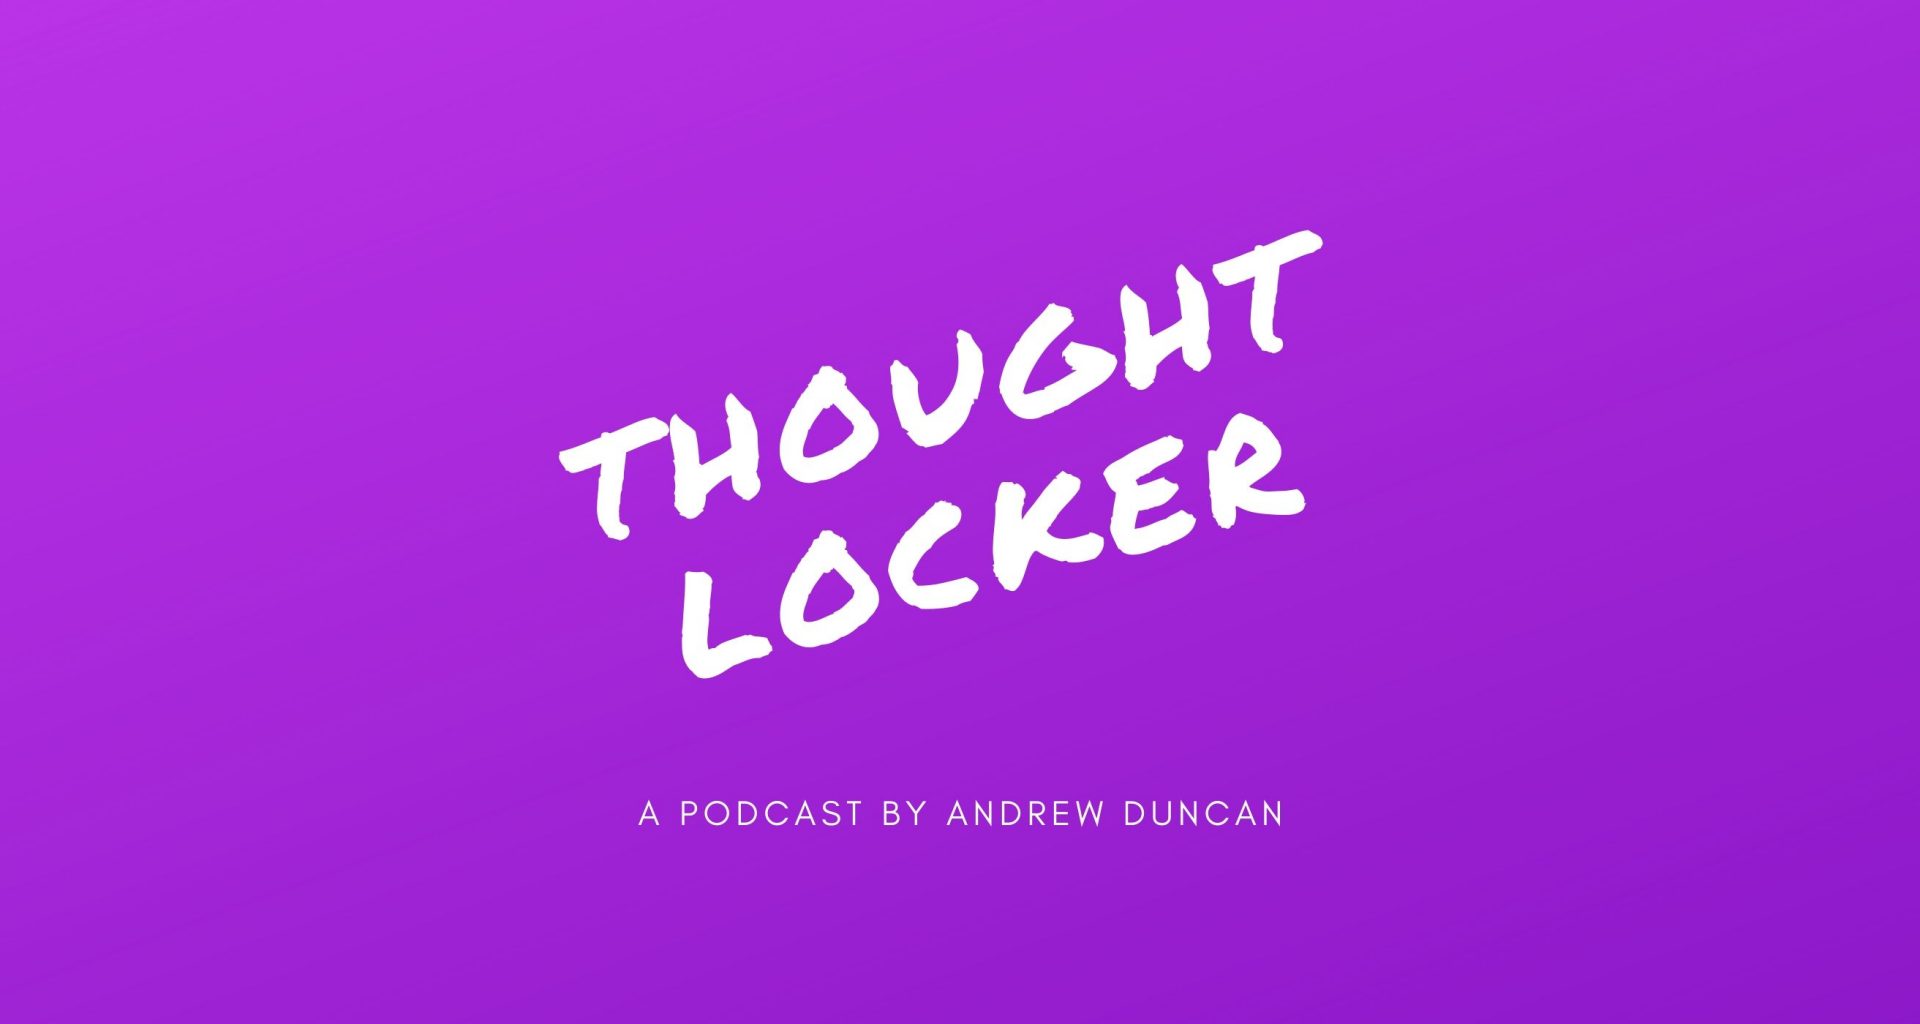 Thought locker